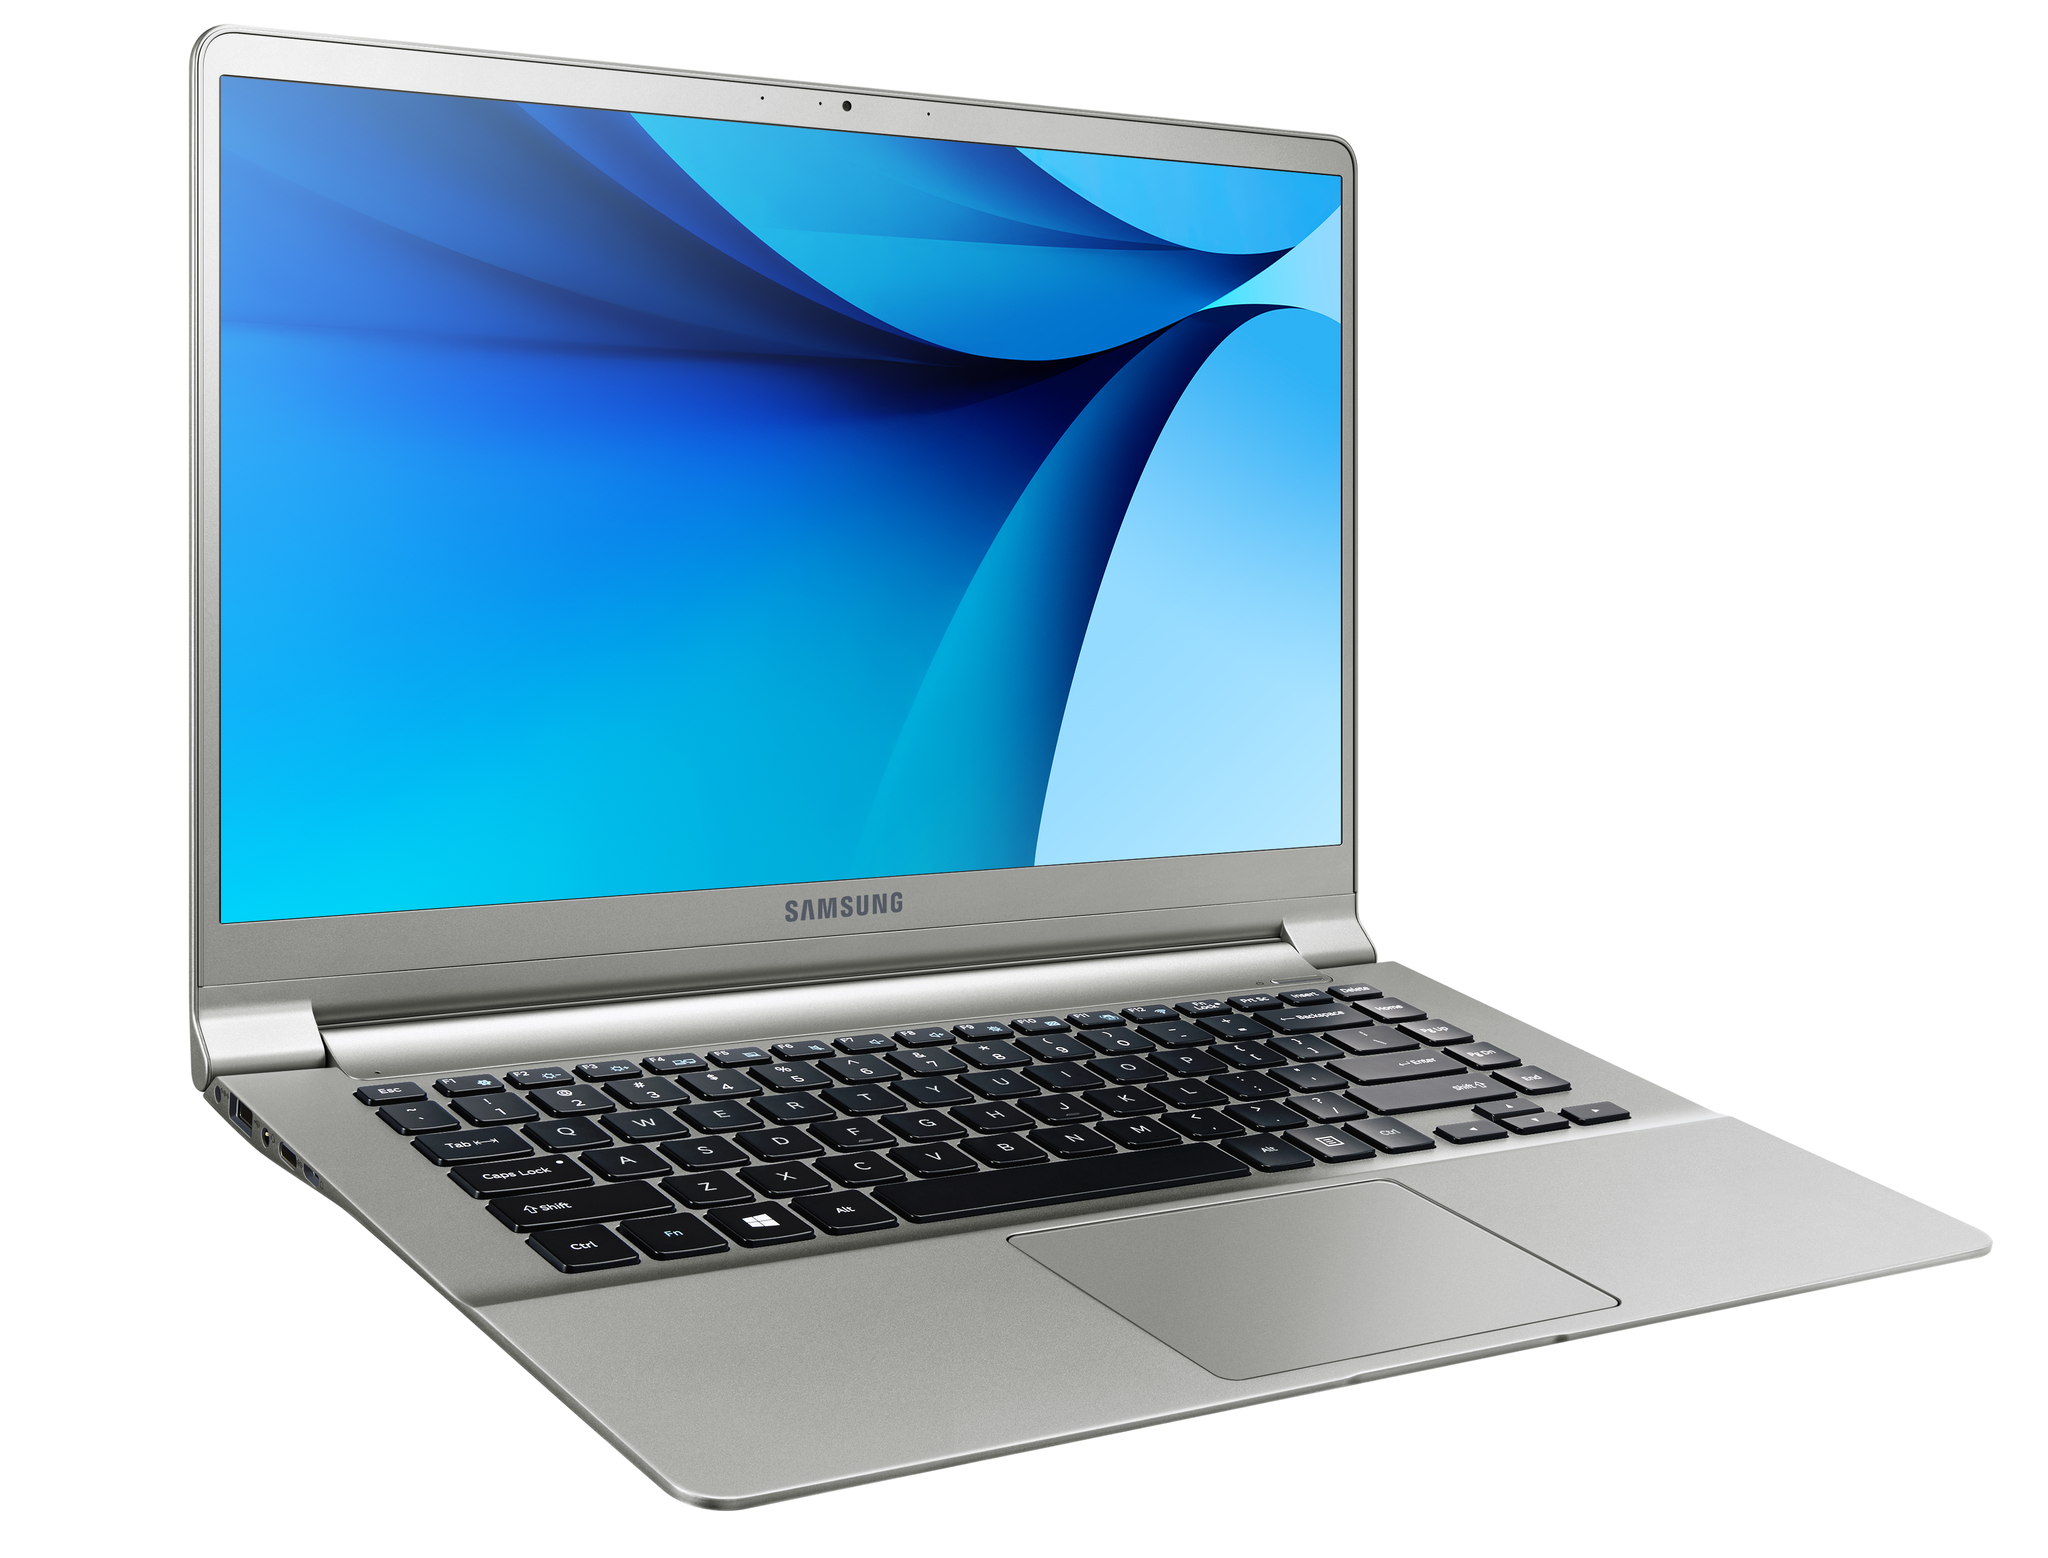 Samsung 15-inch Ultrabook